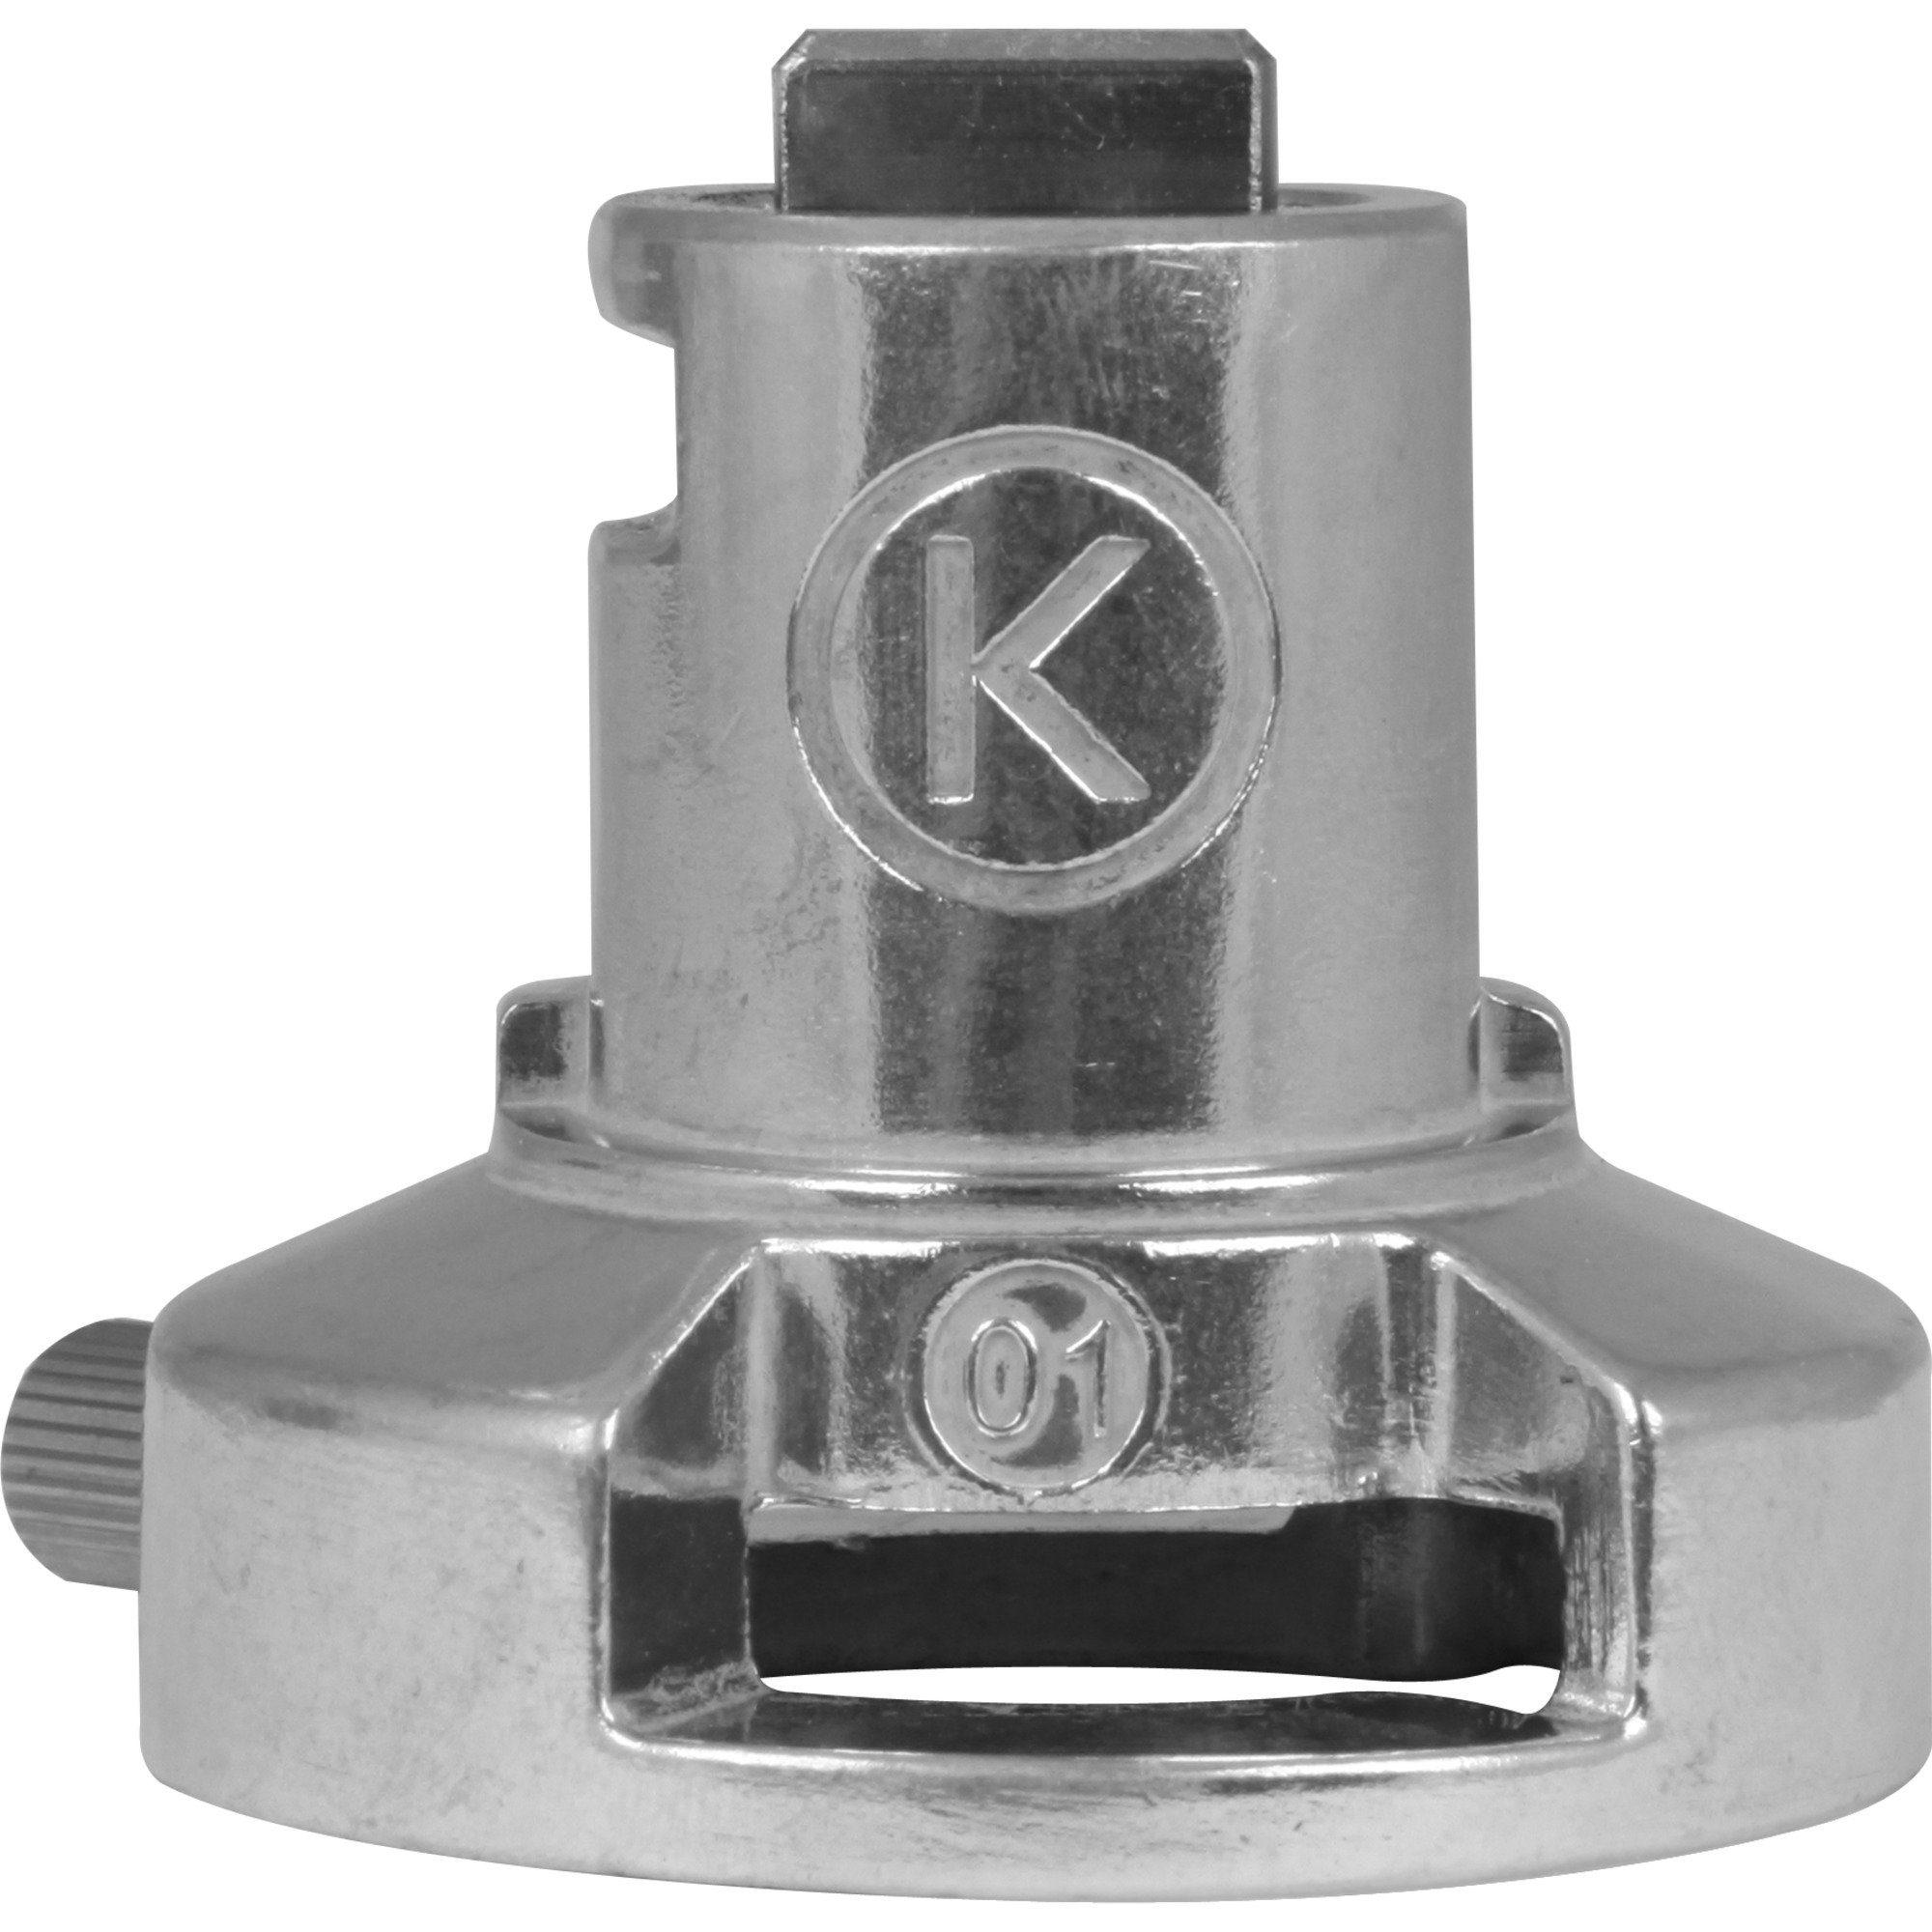 KENWOOD Kenwood Adapter KAT001ME Küchenmaschinen-Adapter